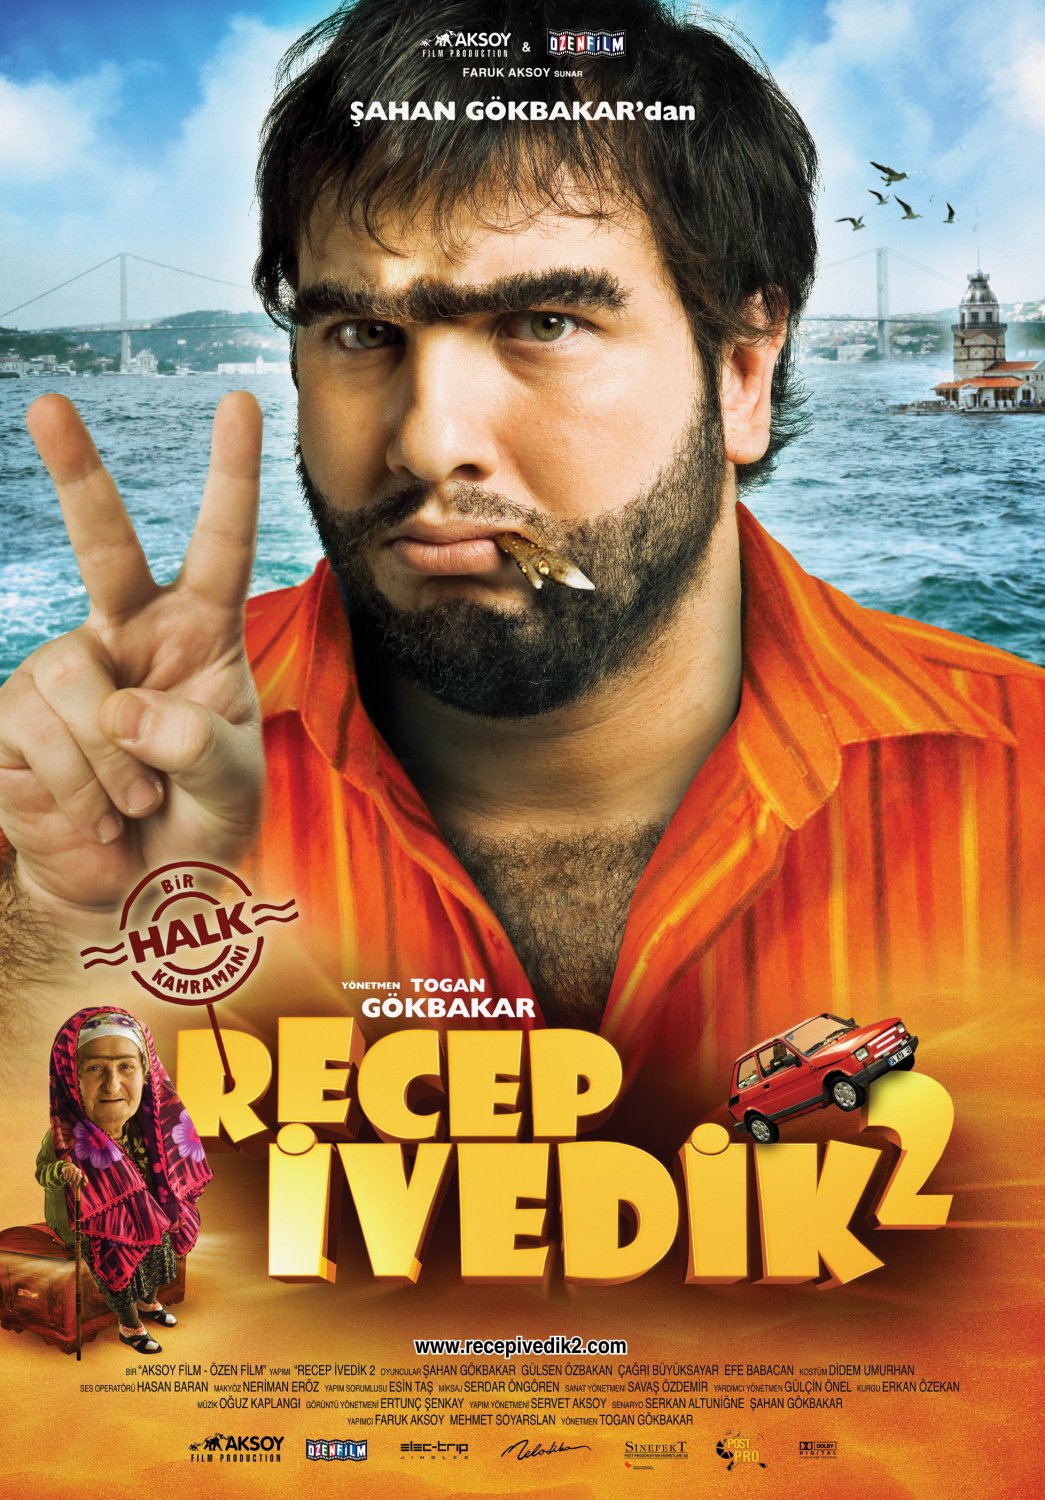 Extra Large Movie Poster Image for Recep Ivedik 2 